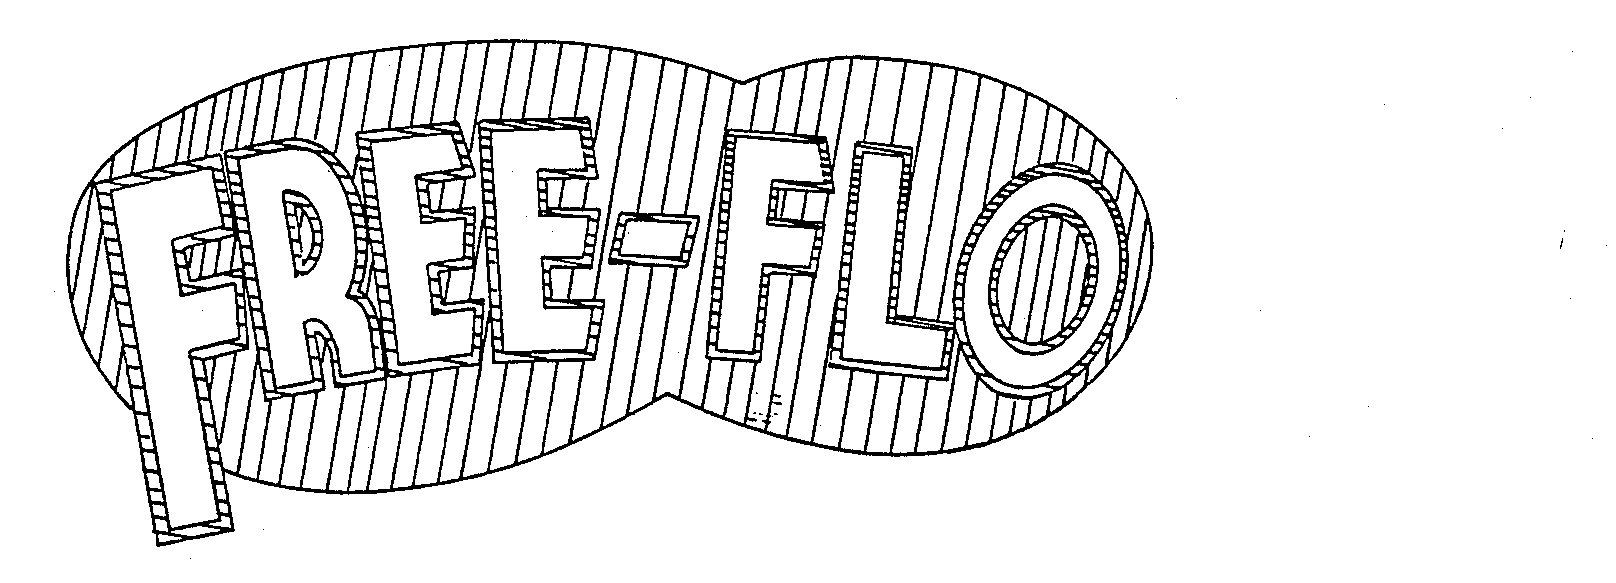 Trademark Logo FREE-FLO